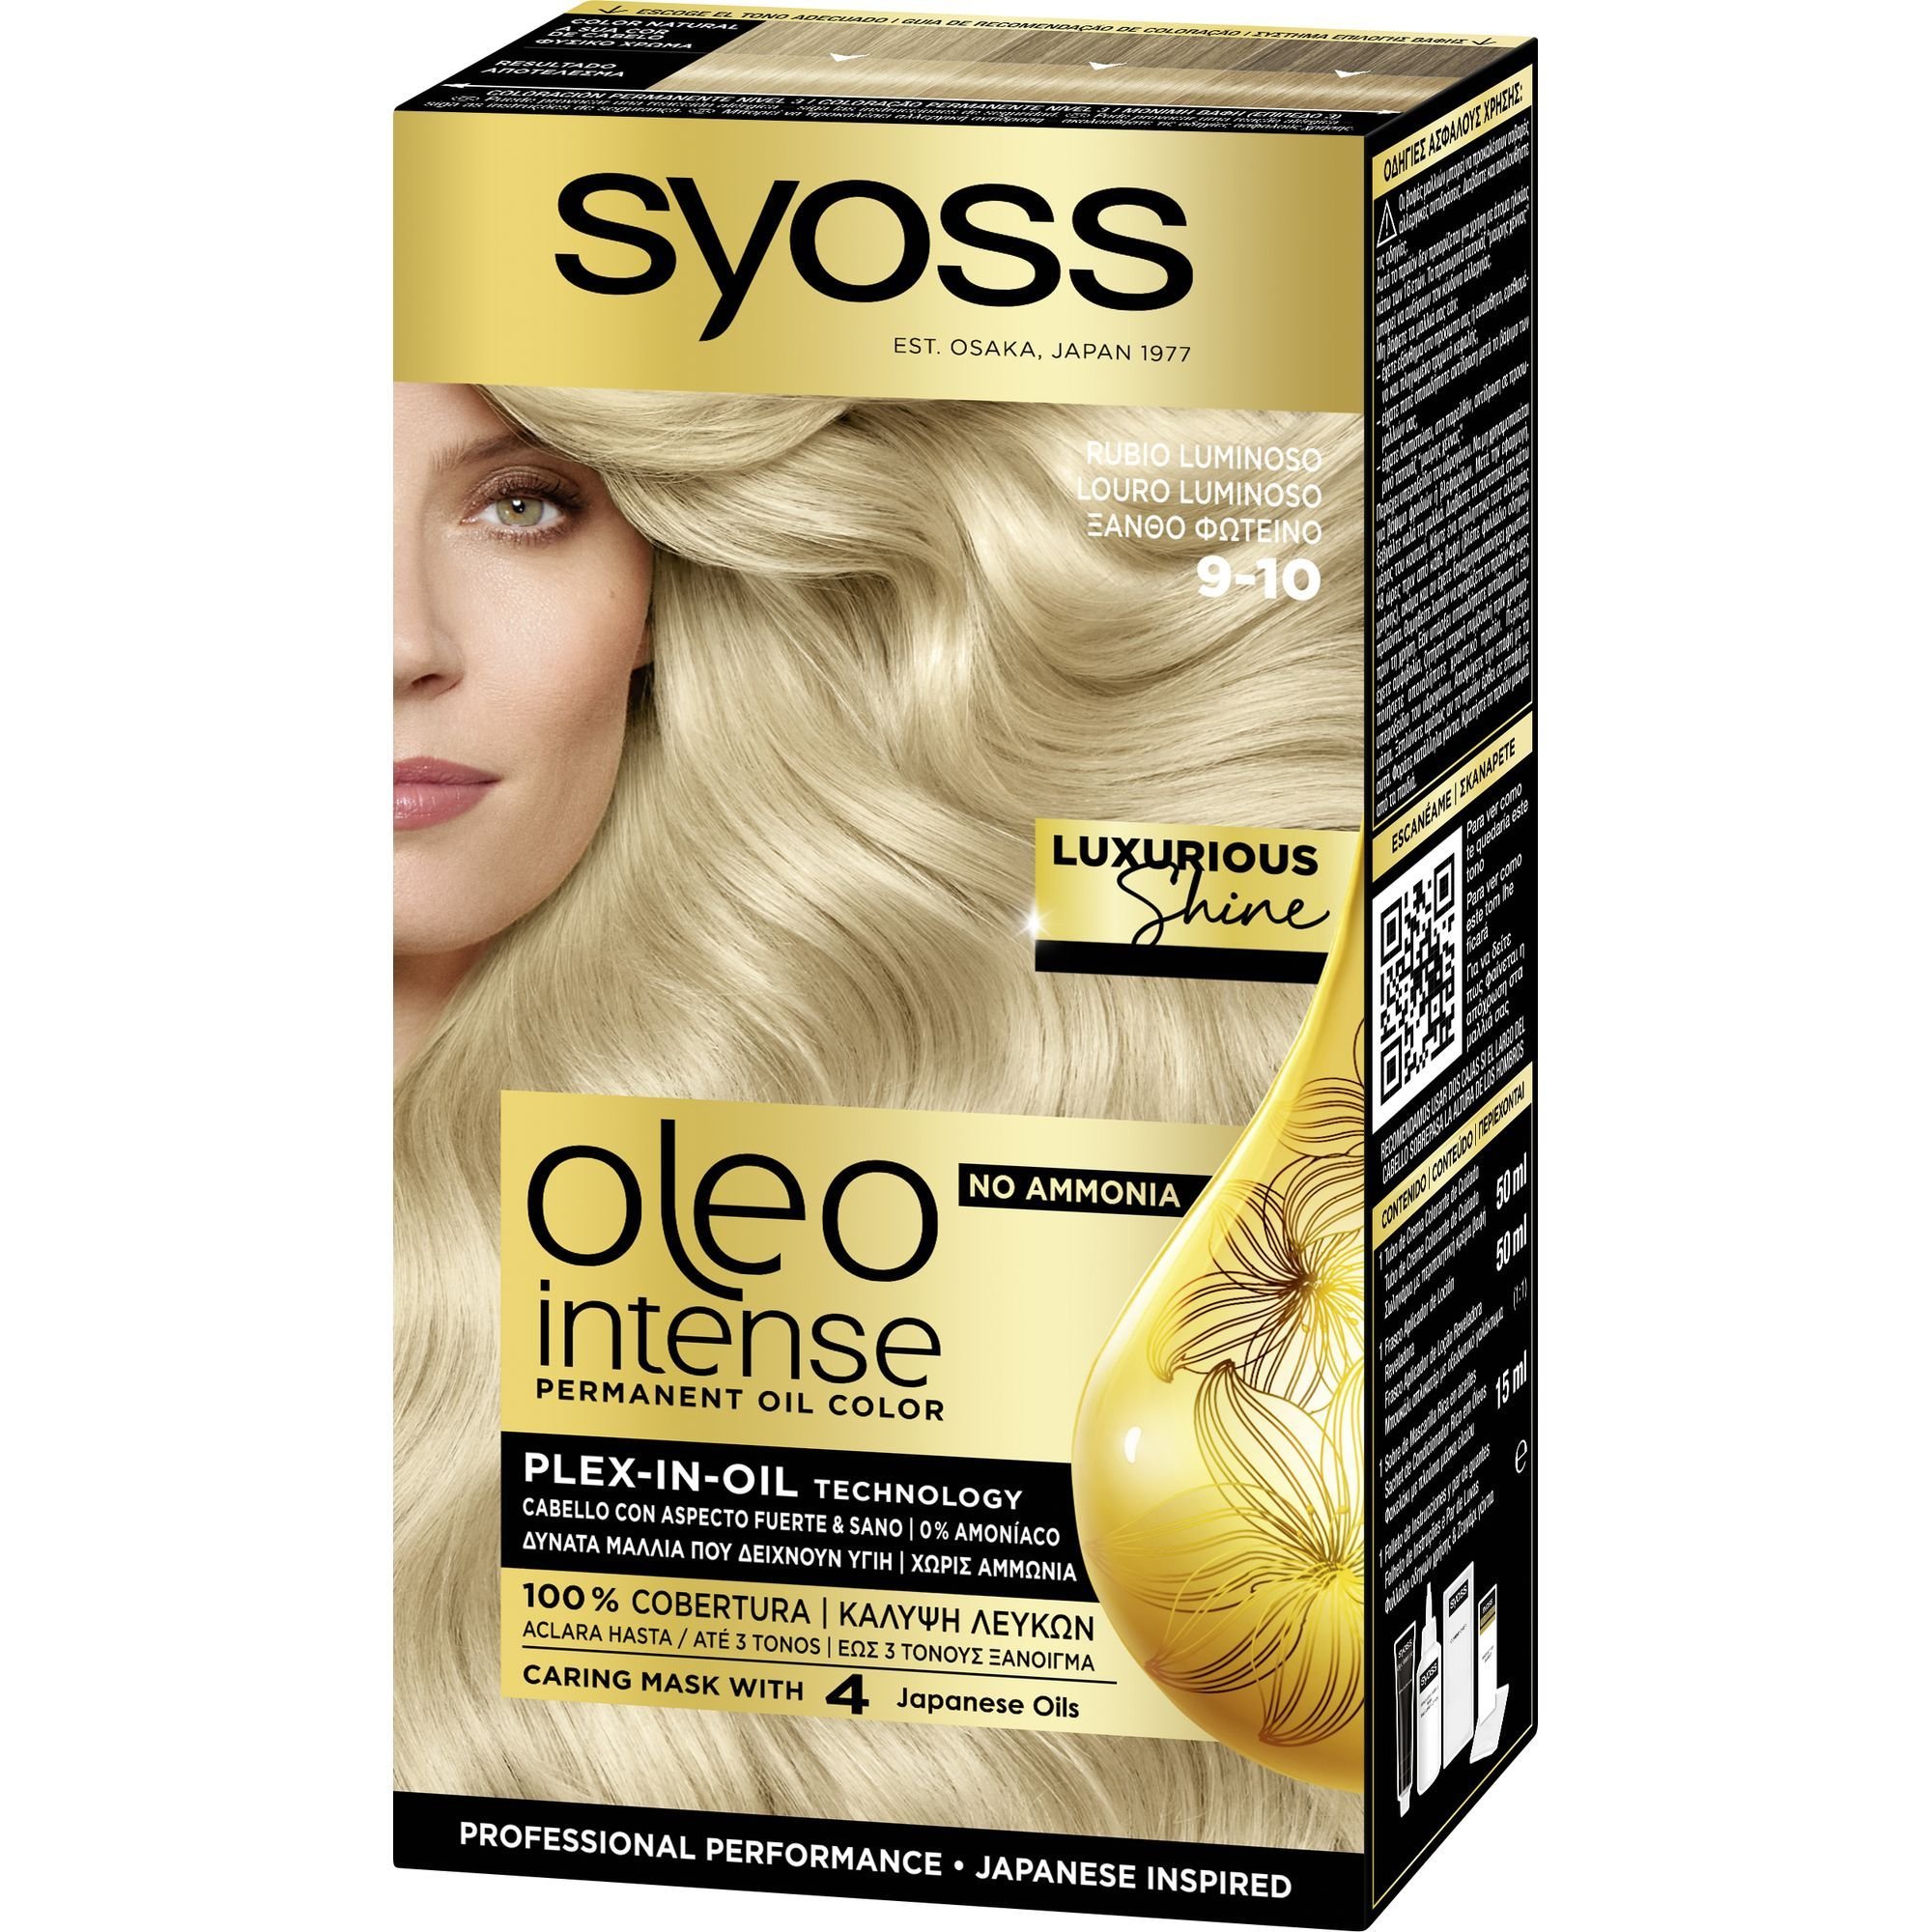 Syoss Syoss Oleo Intense Permanent Oil Hair Color Kit Επαγγελματική Μόνιμη Βαφή Μαλλιών για Εξαιρετική Κάλυψη & Έντονο Χρώμα που Διαρκεί, Χωρίς Αμμωνία 1 Τεμάχιο - 9-10 Ξανθό Φωτεινό